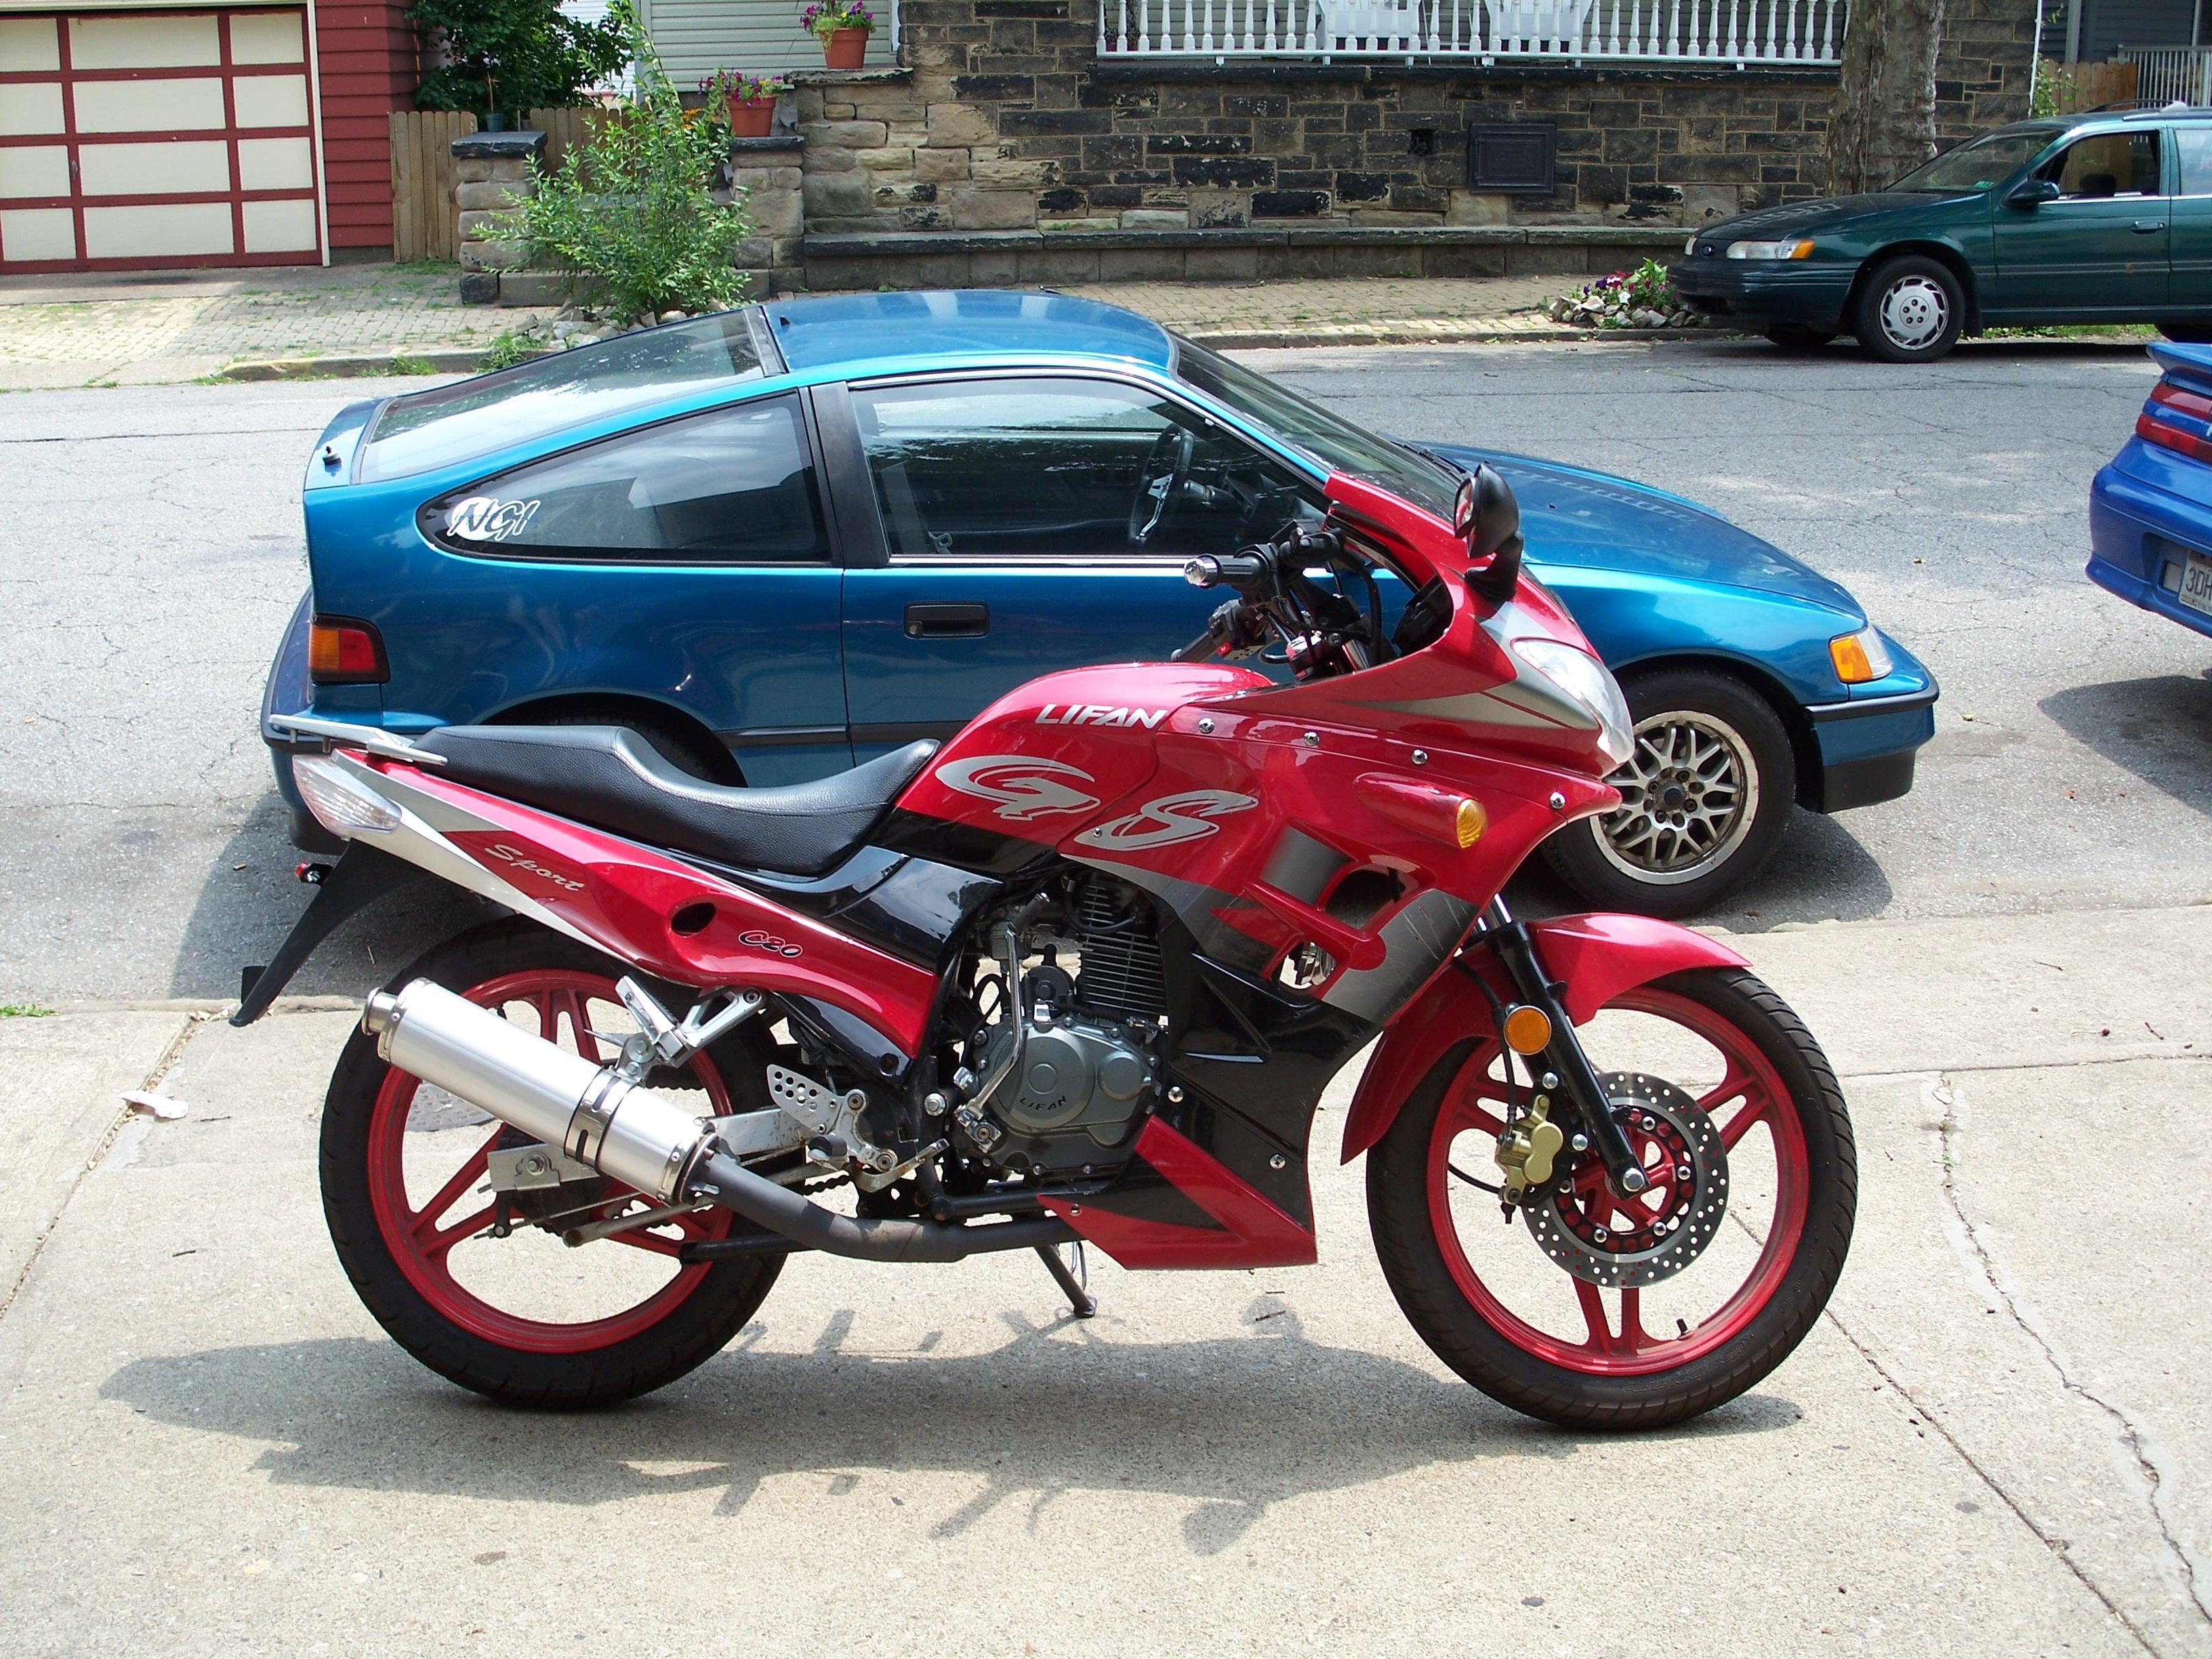 2007 lifan motorcycle